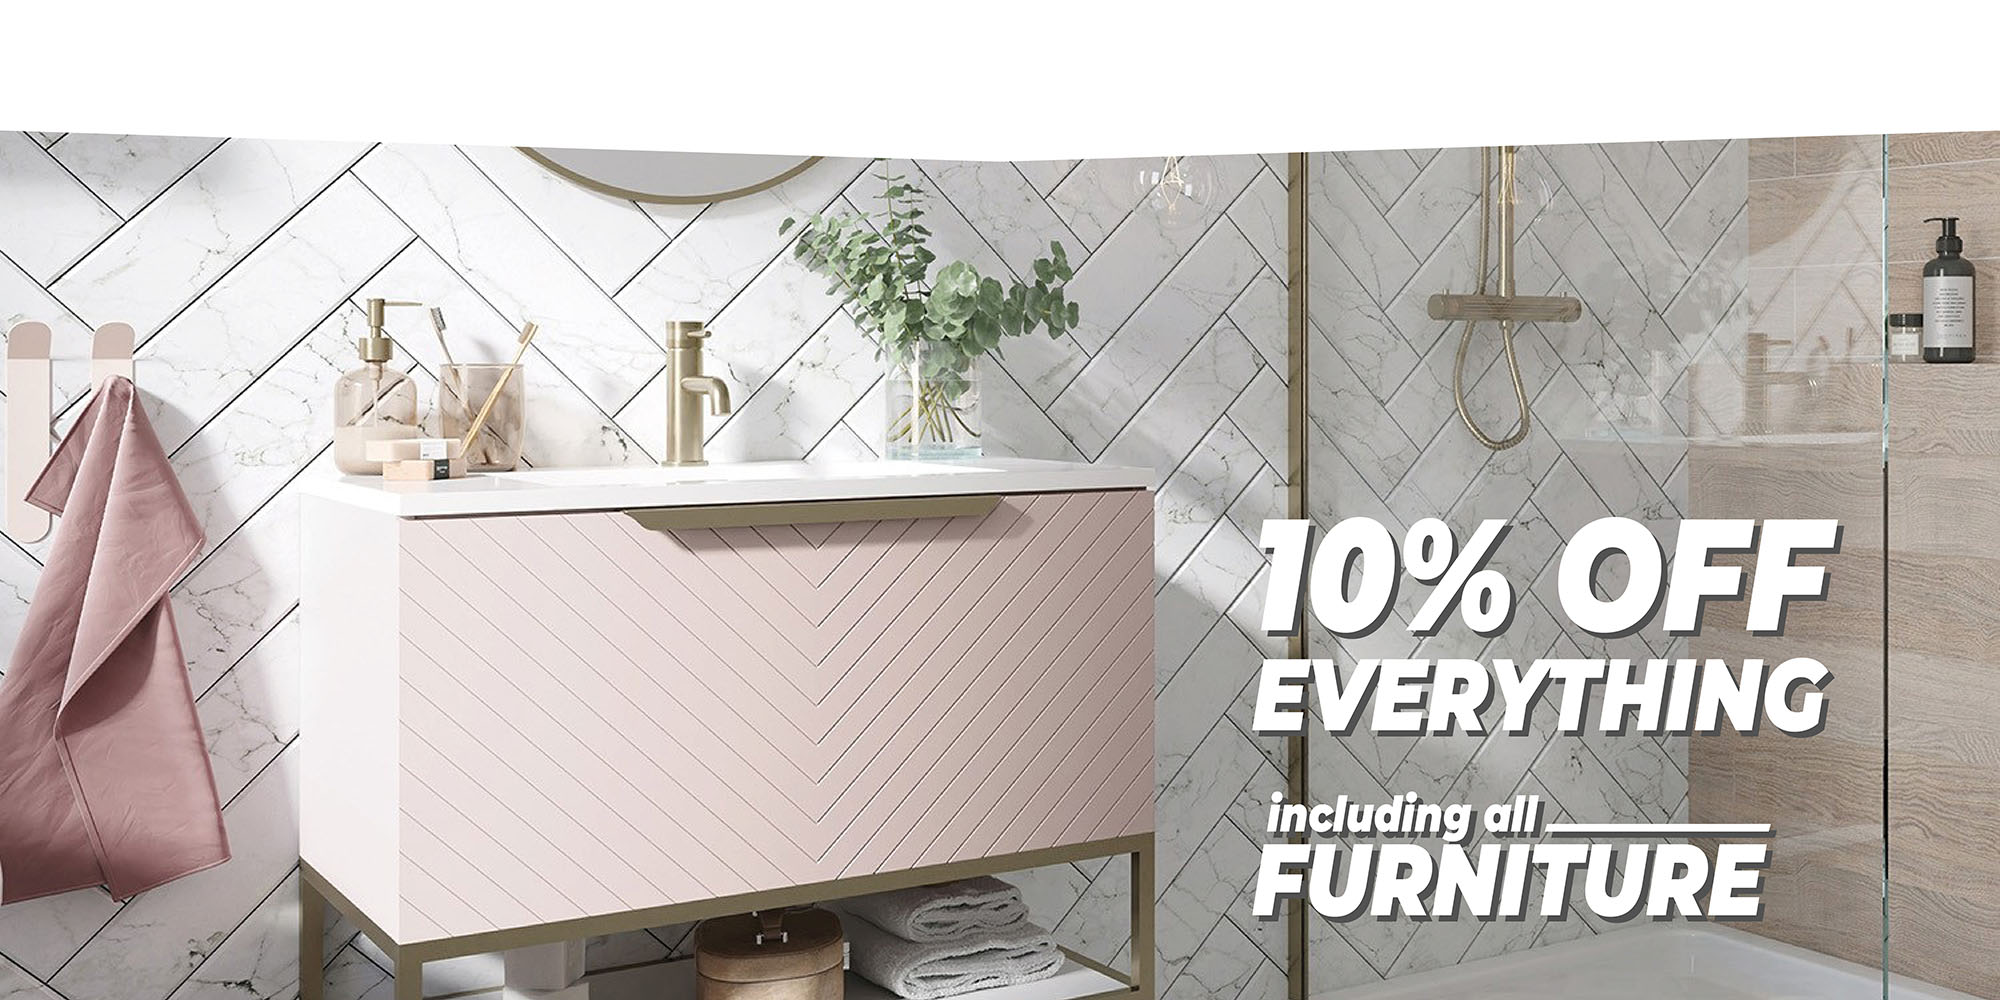 10% off all bathroom furniture